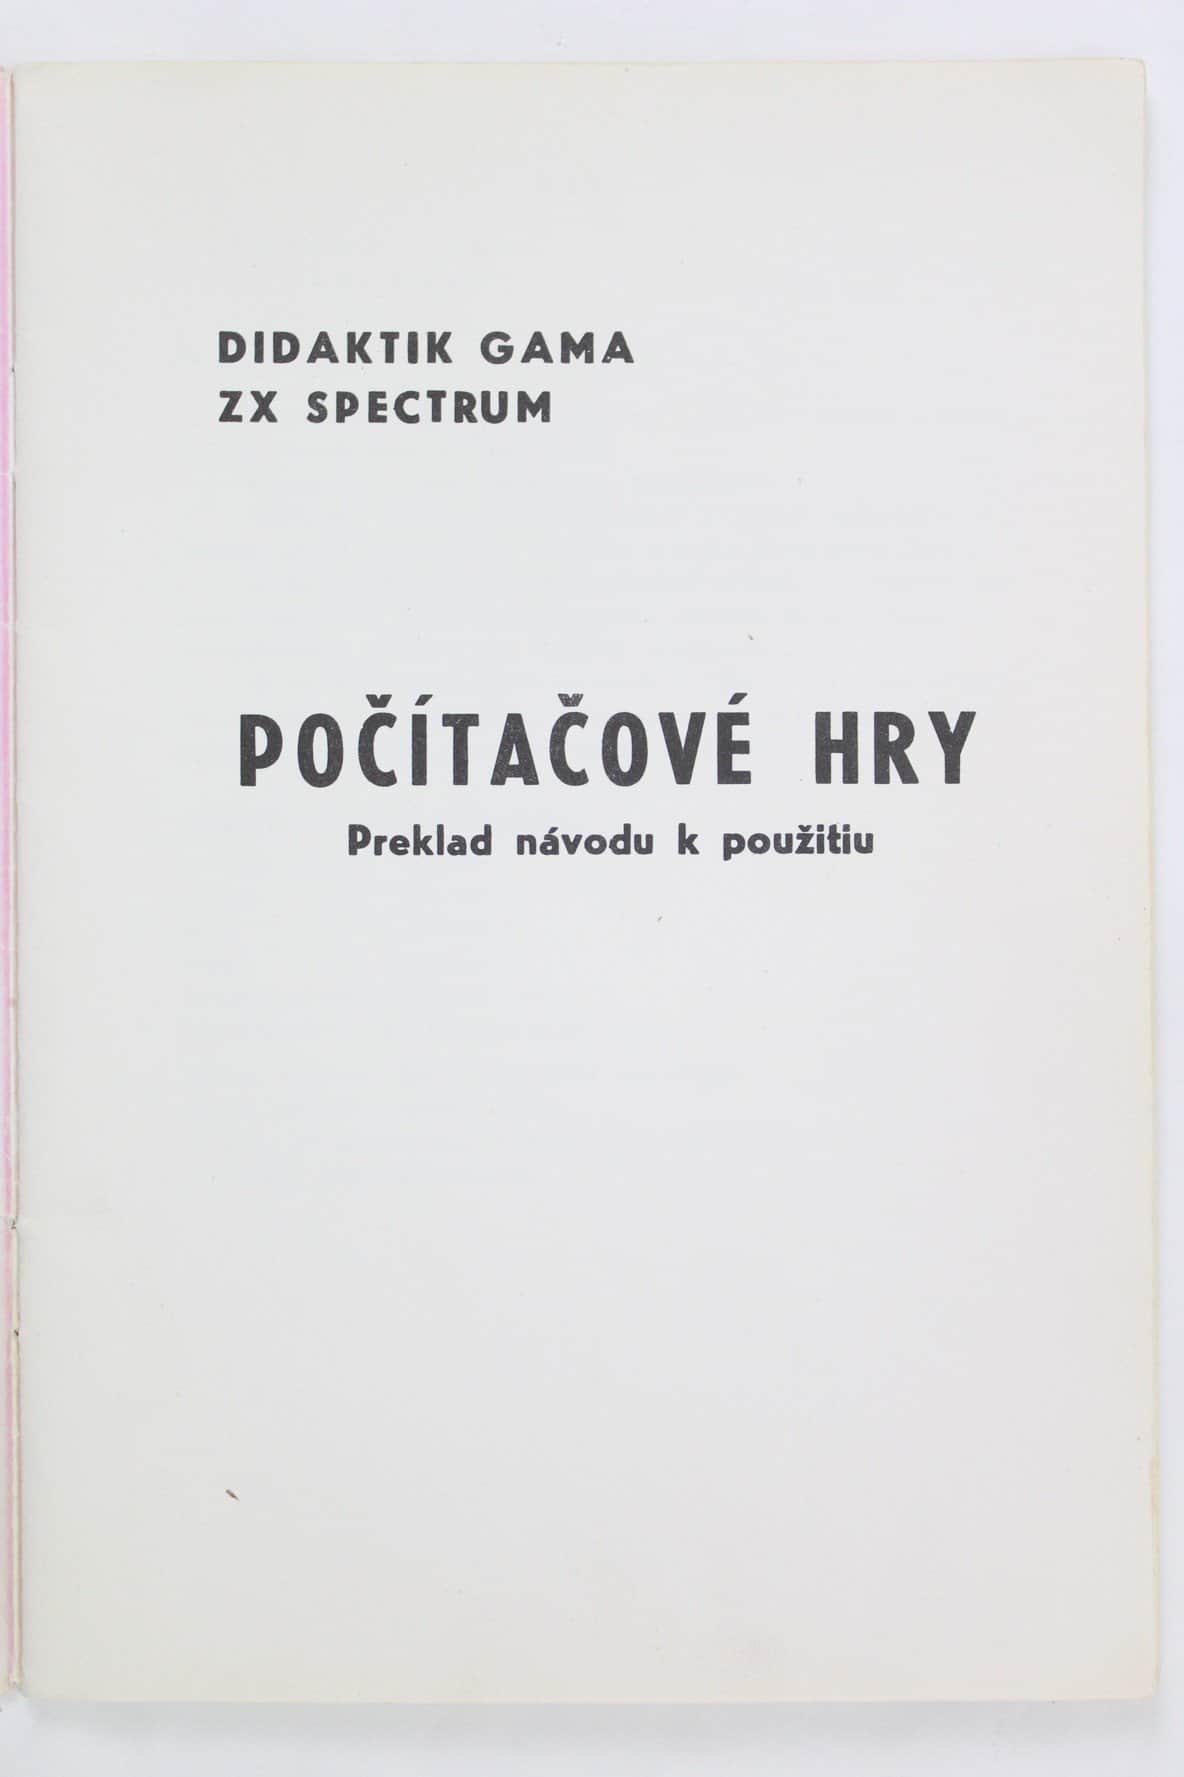 Pocitacove-hry-Didaktik-Gama-Strana02